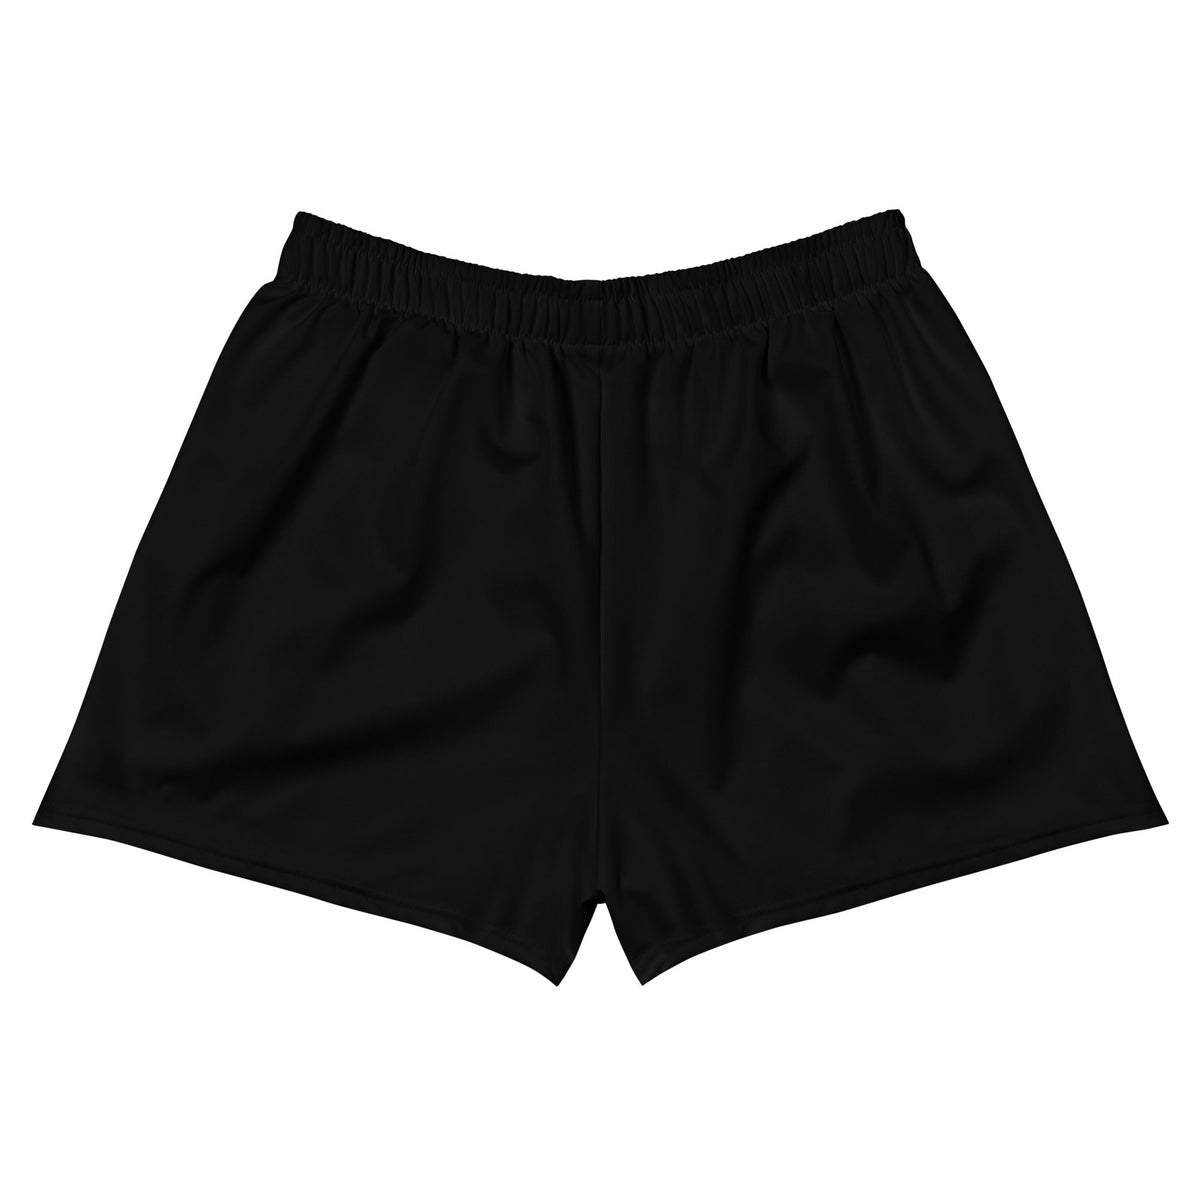 Recycelte Sport-Shorts für Damen Monstera - earlyfish